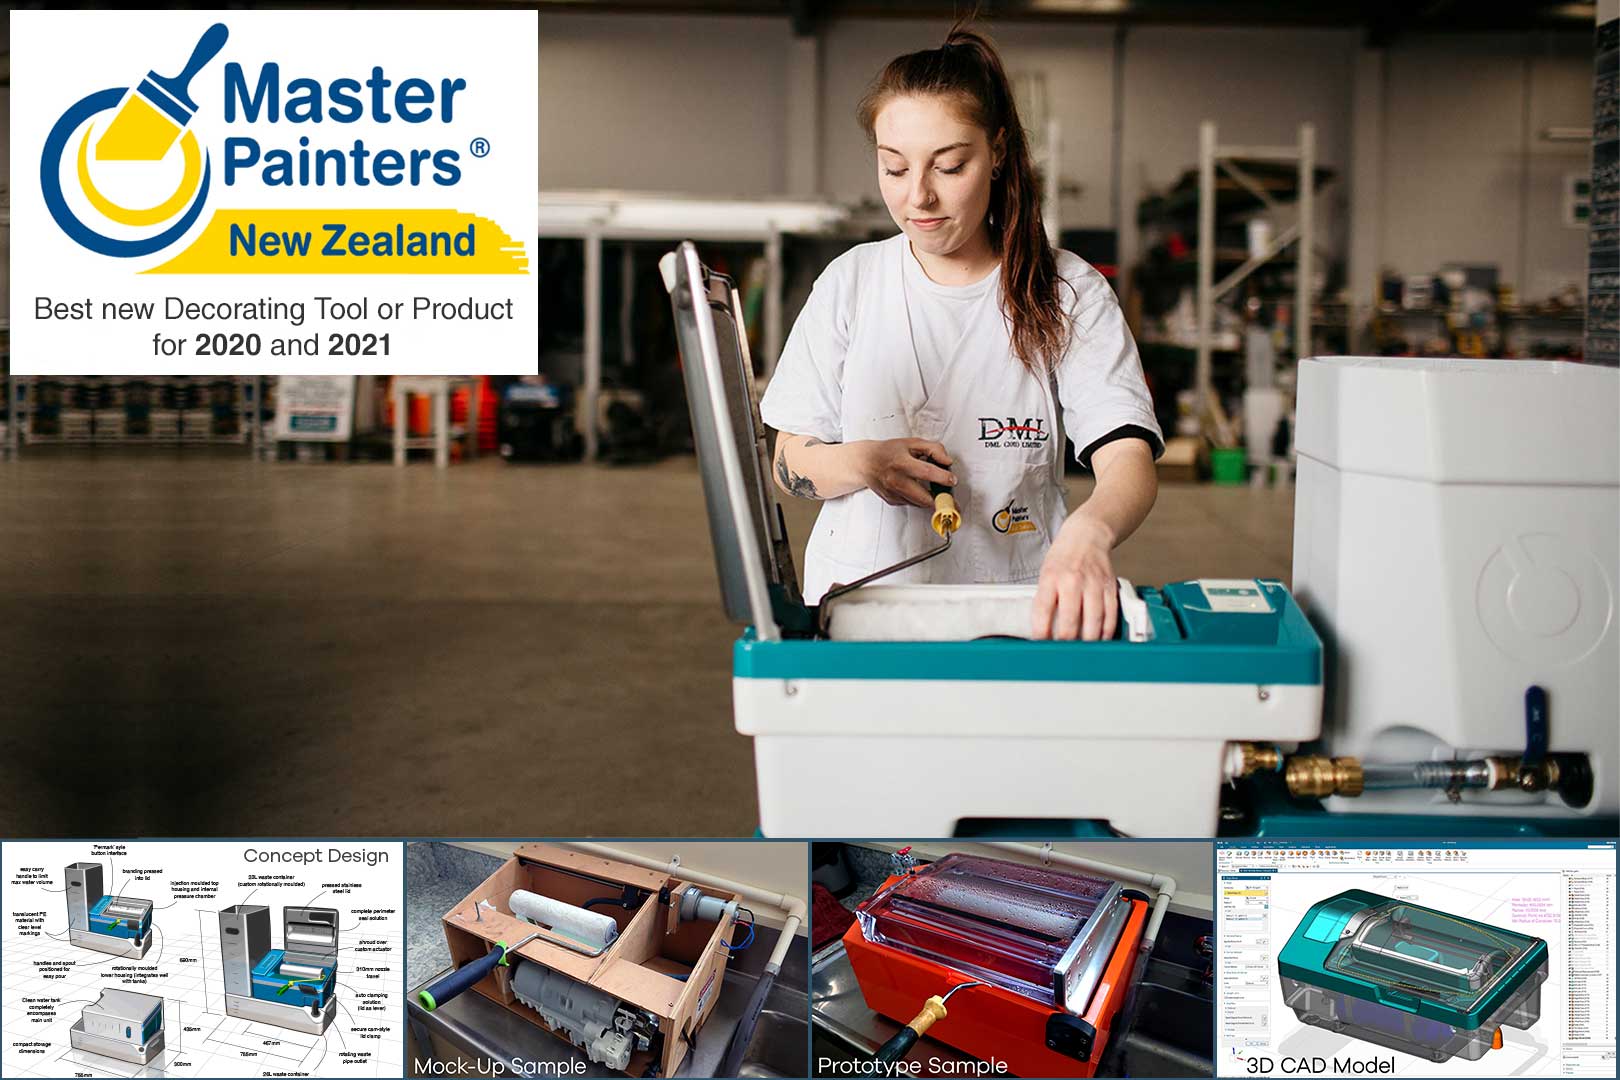 Roller Blaster paint roller cleaner design by Idea